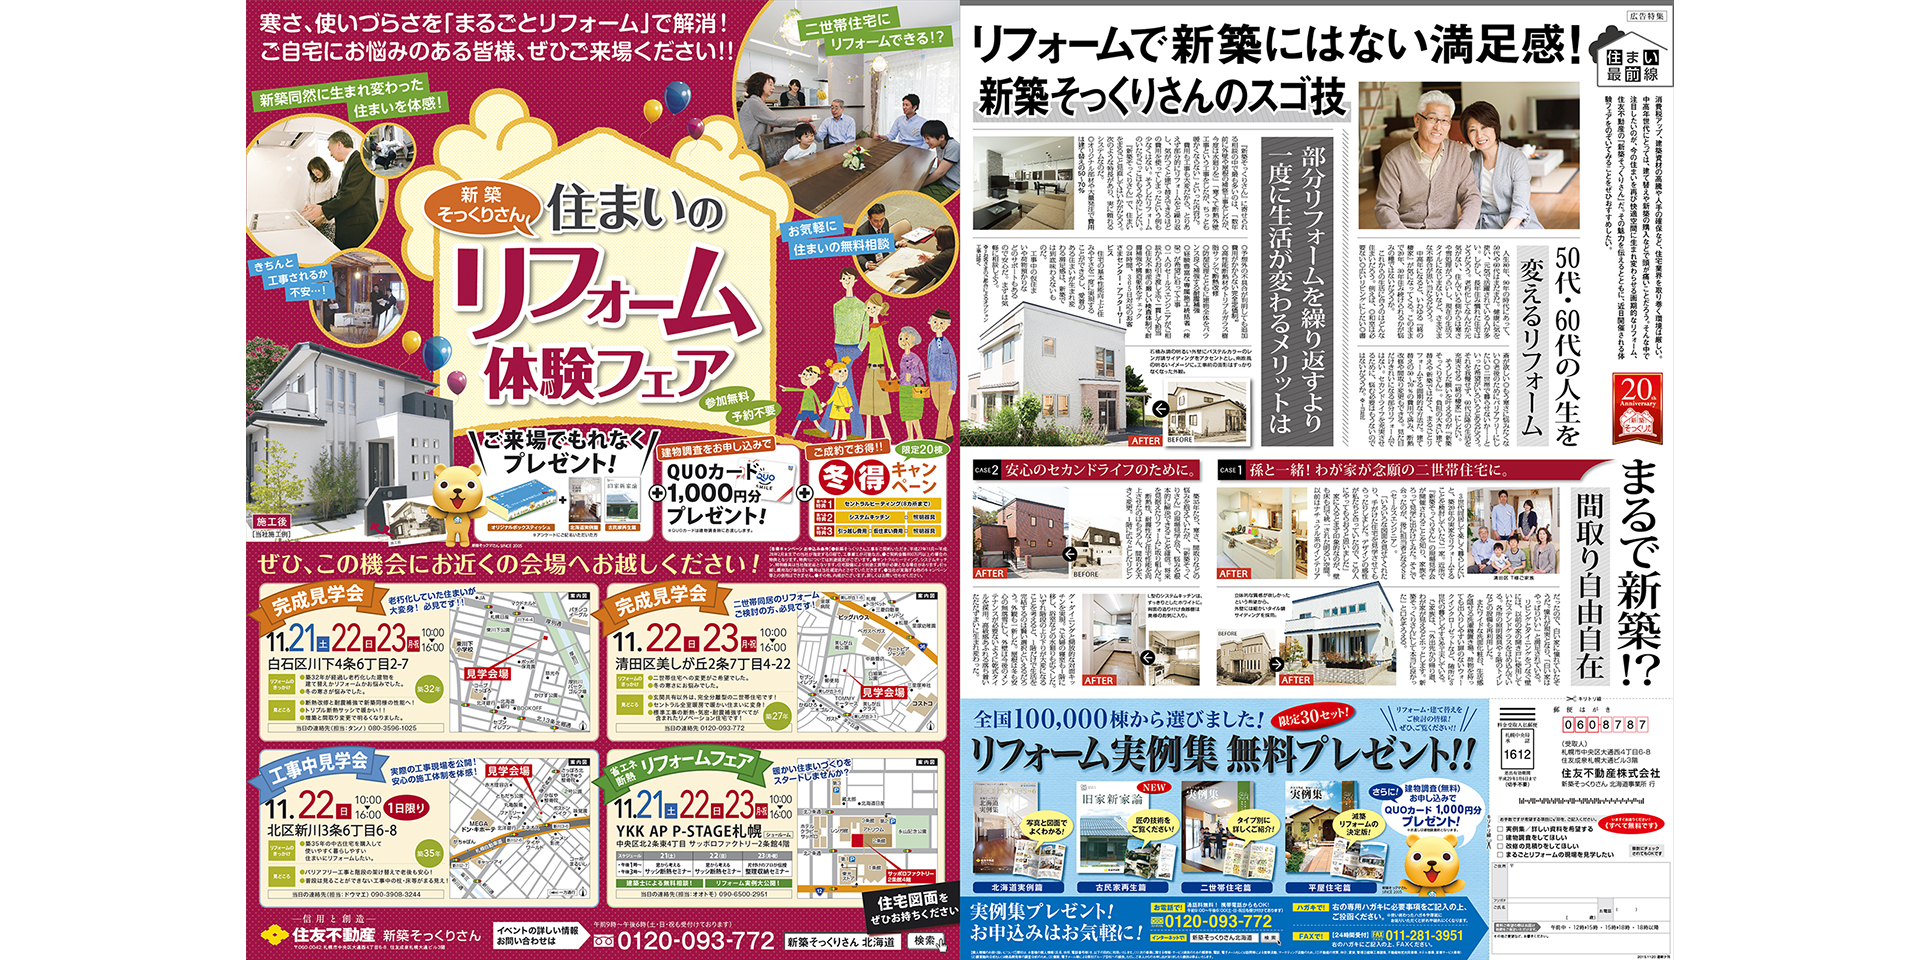 イベント告知 新聞30段広告 株式会社自然農園 販促 広告活動 地域開発事業のサポート 札幌 東京